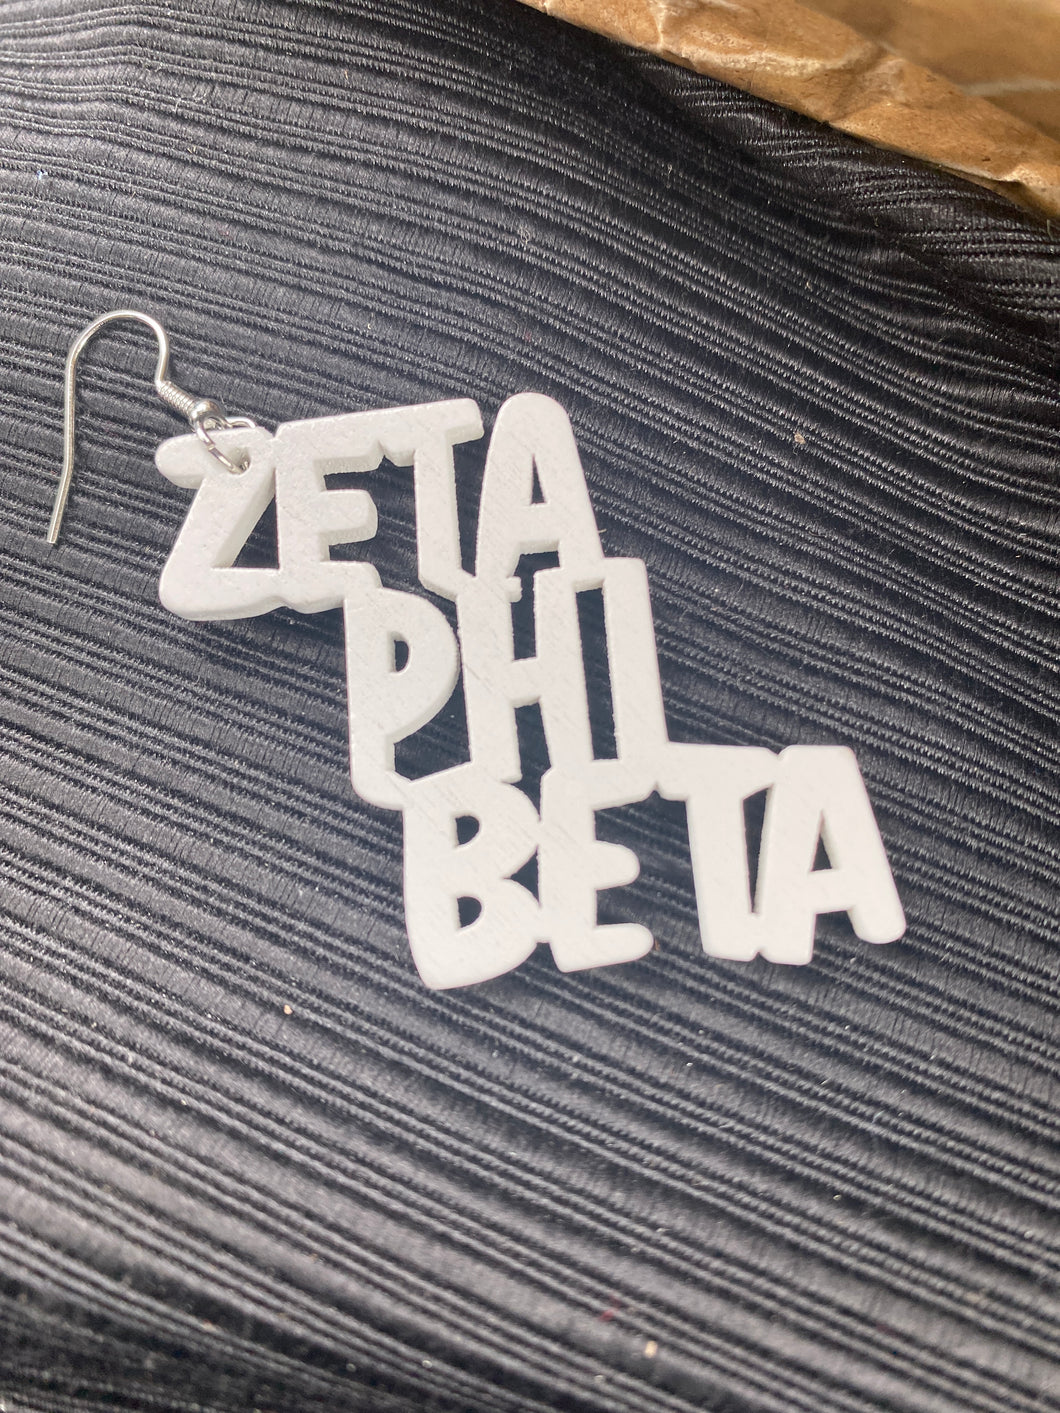 Zeta Phi Beta carved earrings